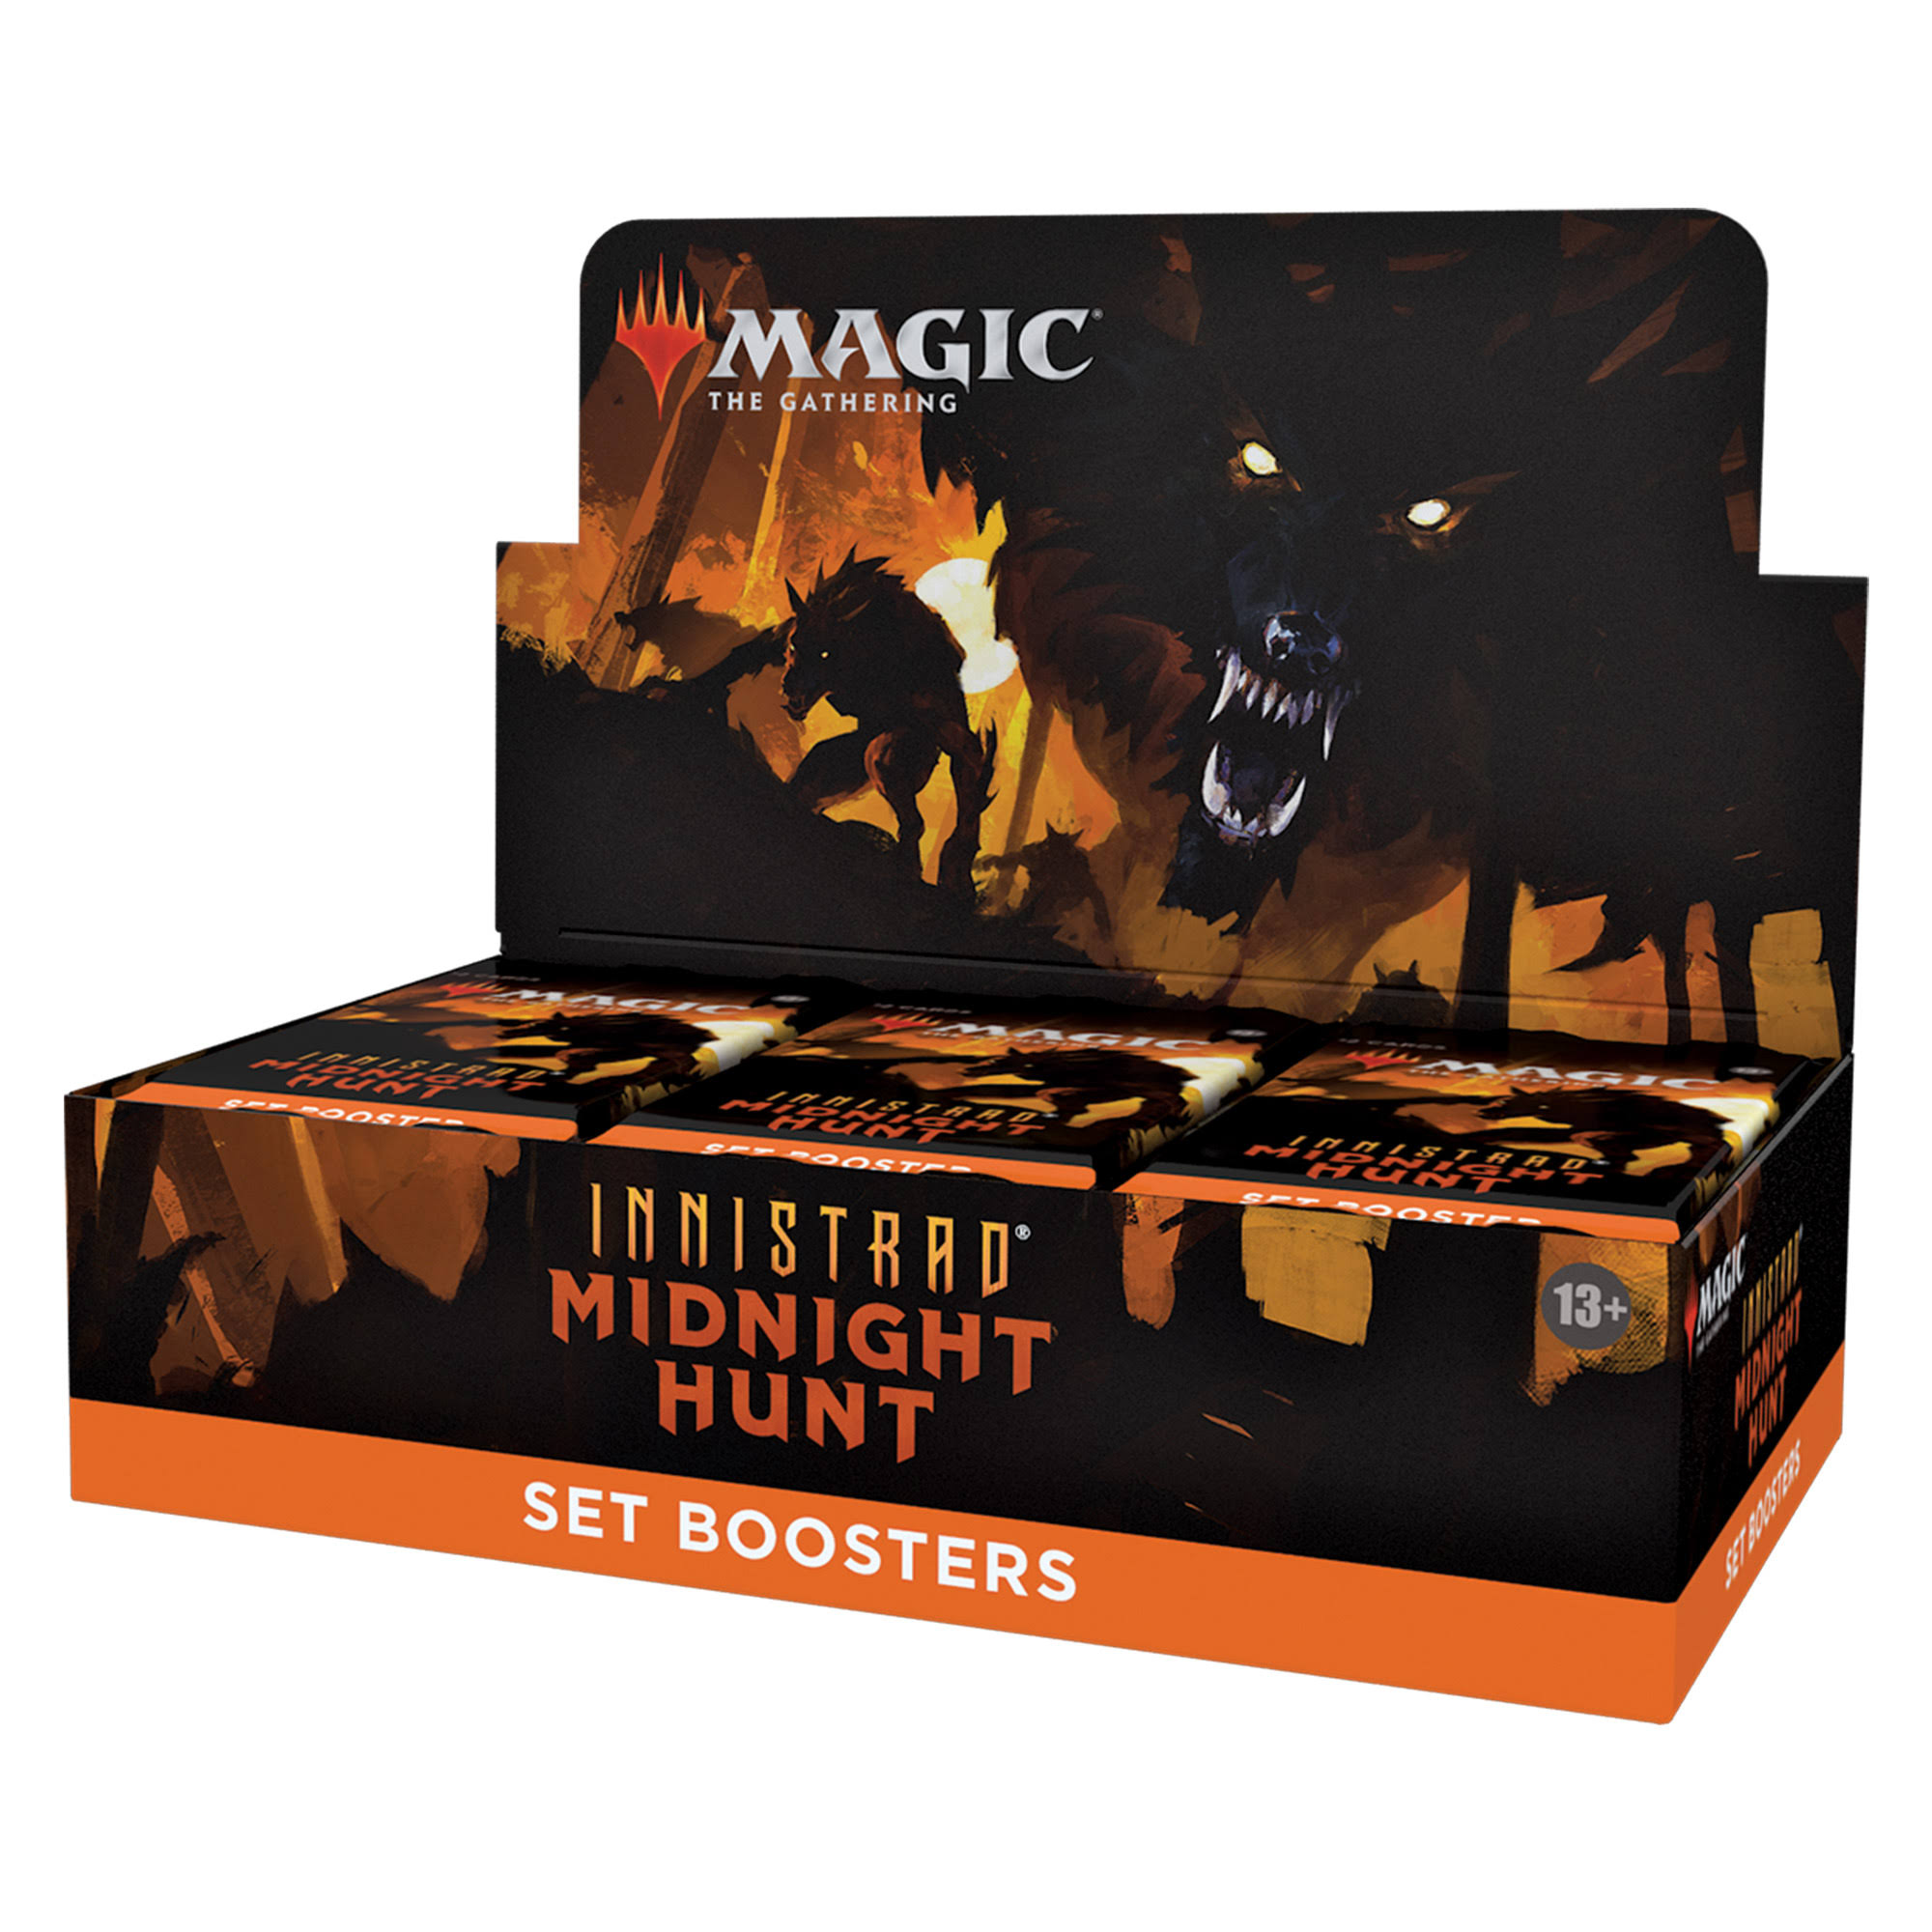 Magic The Gathering - Innistrad Midnight Hunt - Set Booster Box